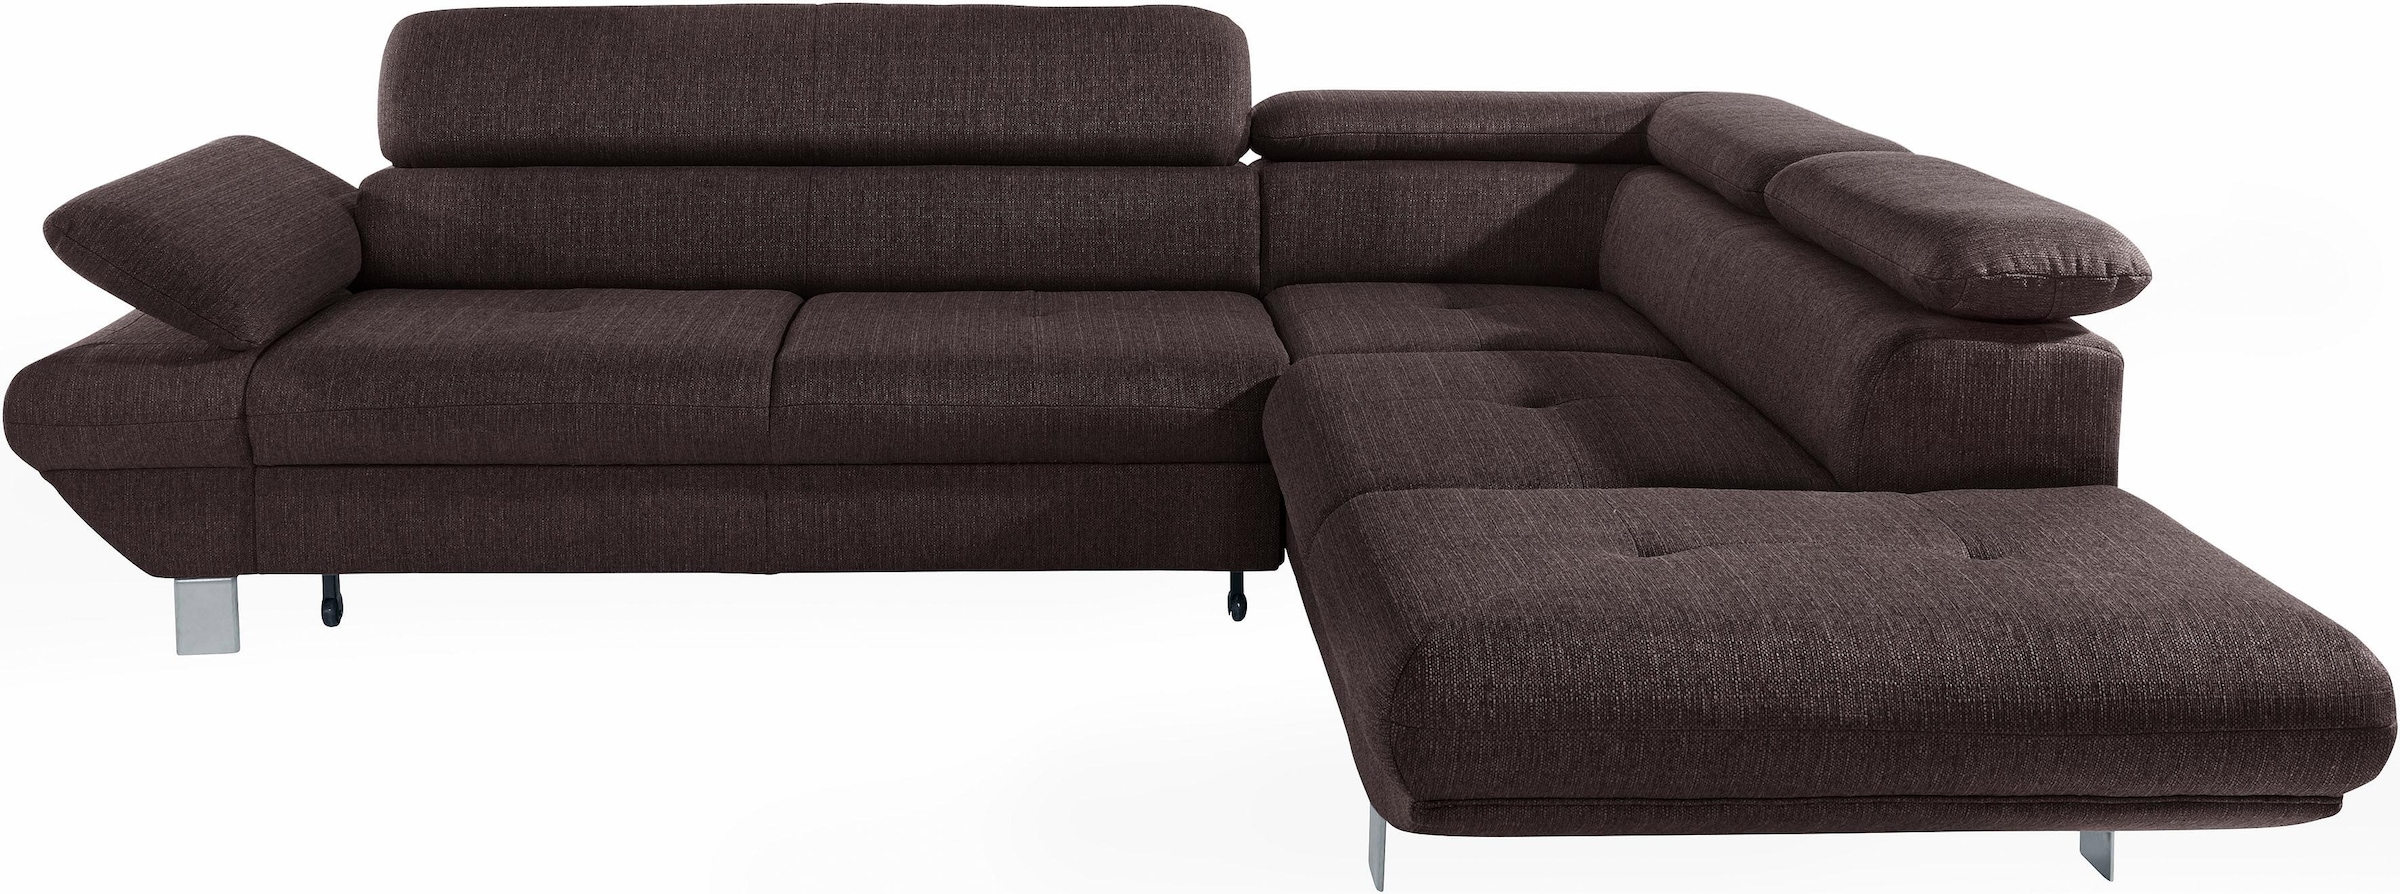 sofa kaufen fashion exxpo BAUR mit online Bettfunktion - Ecksofa |